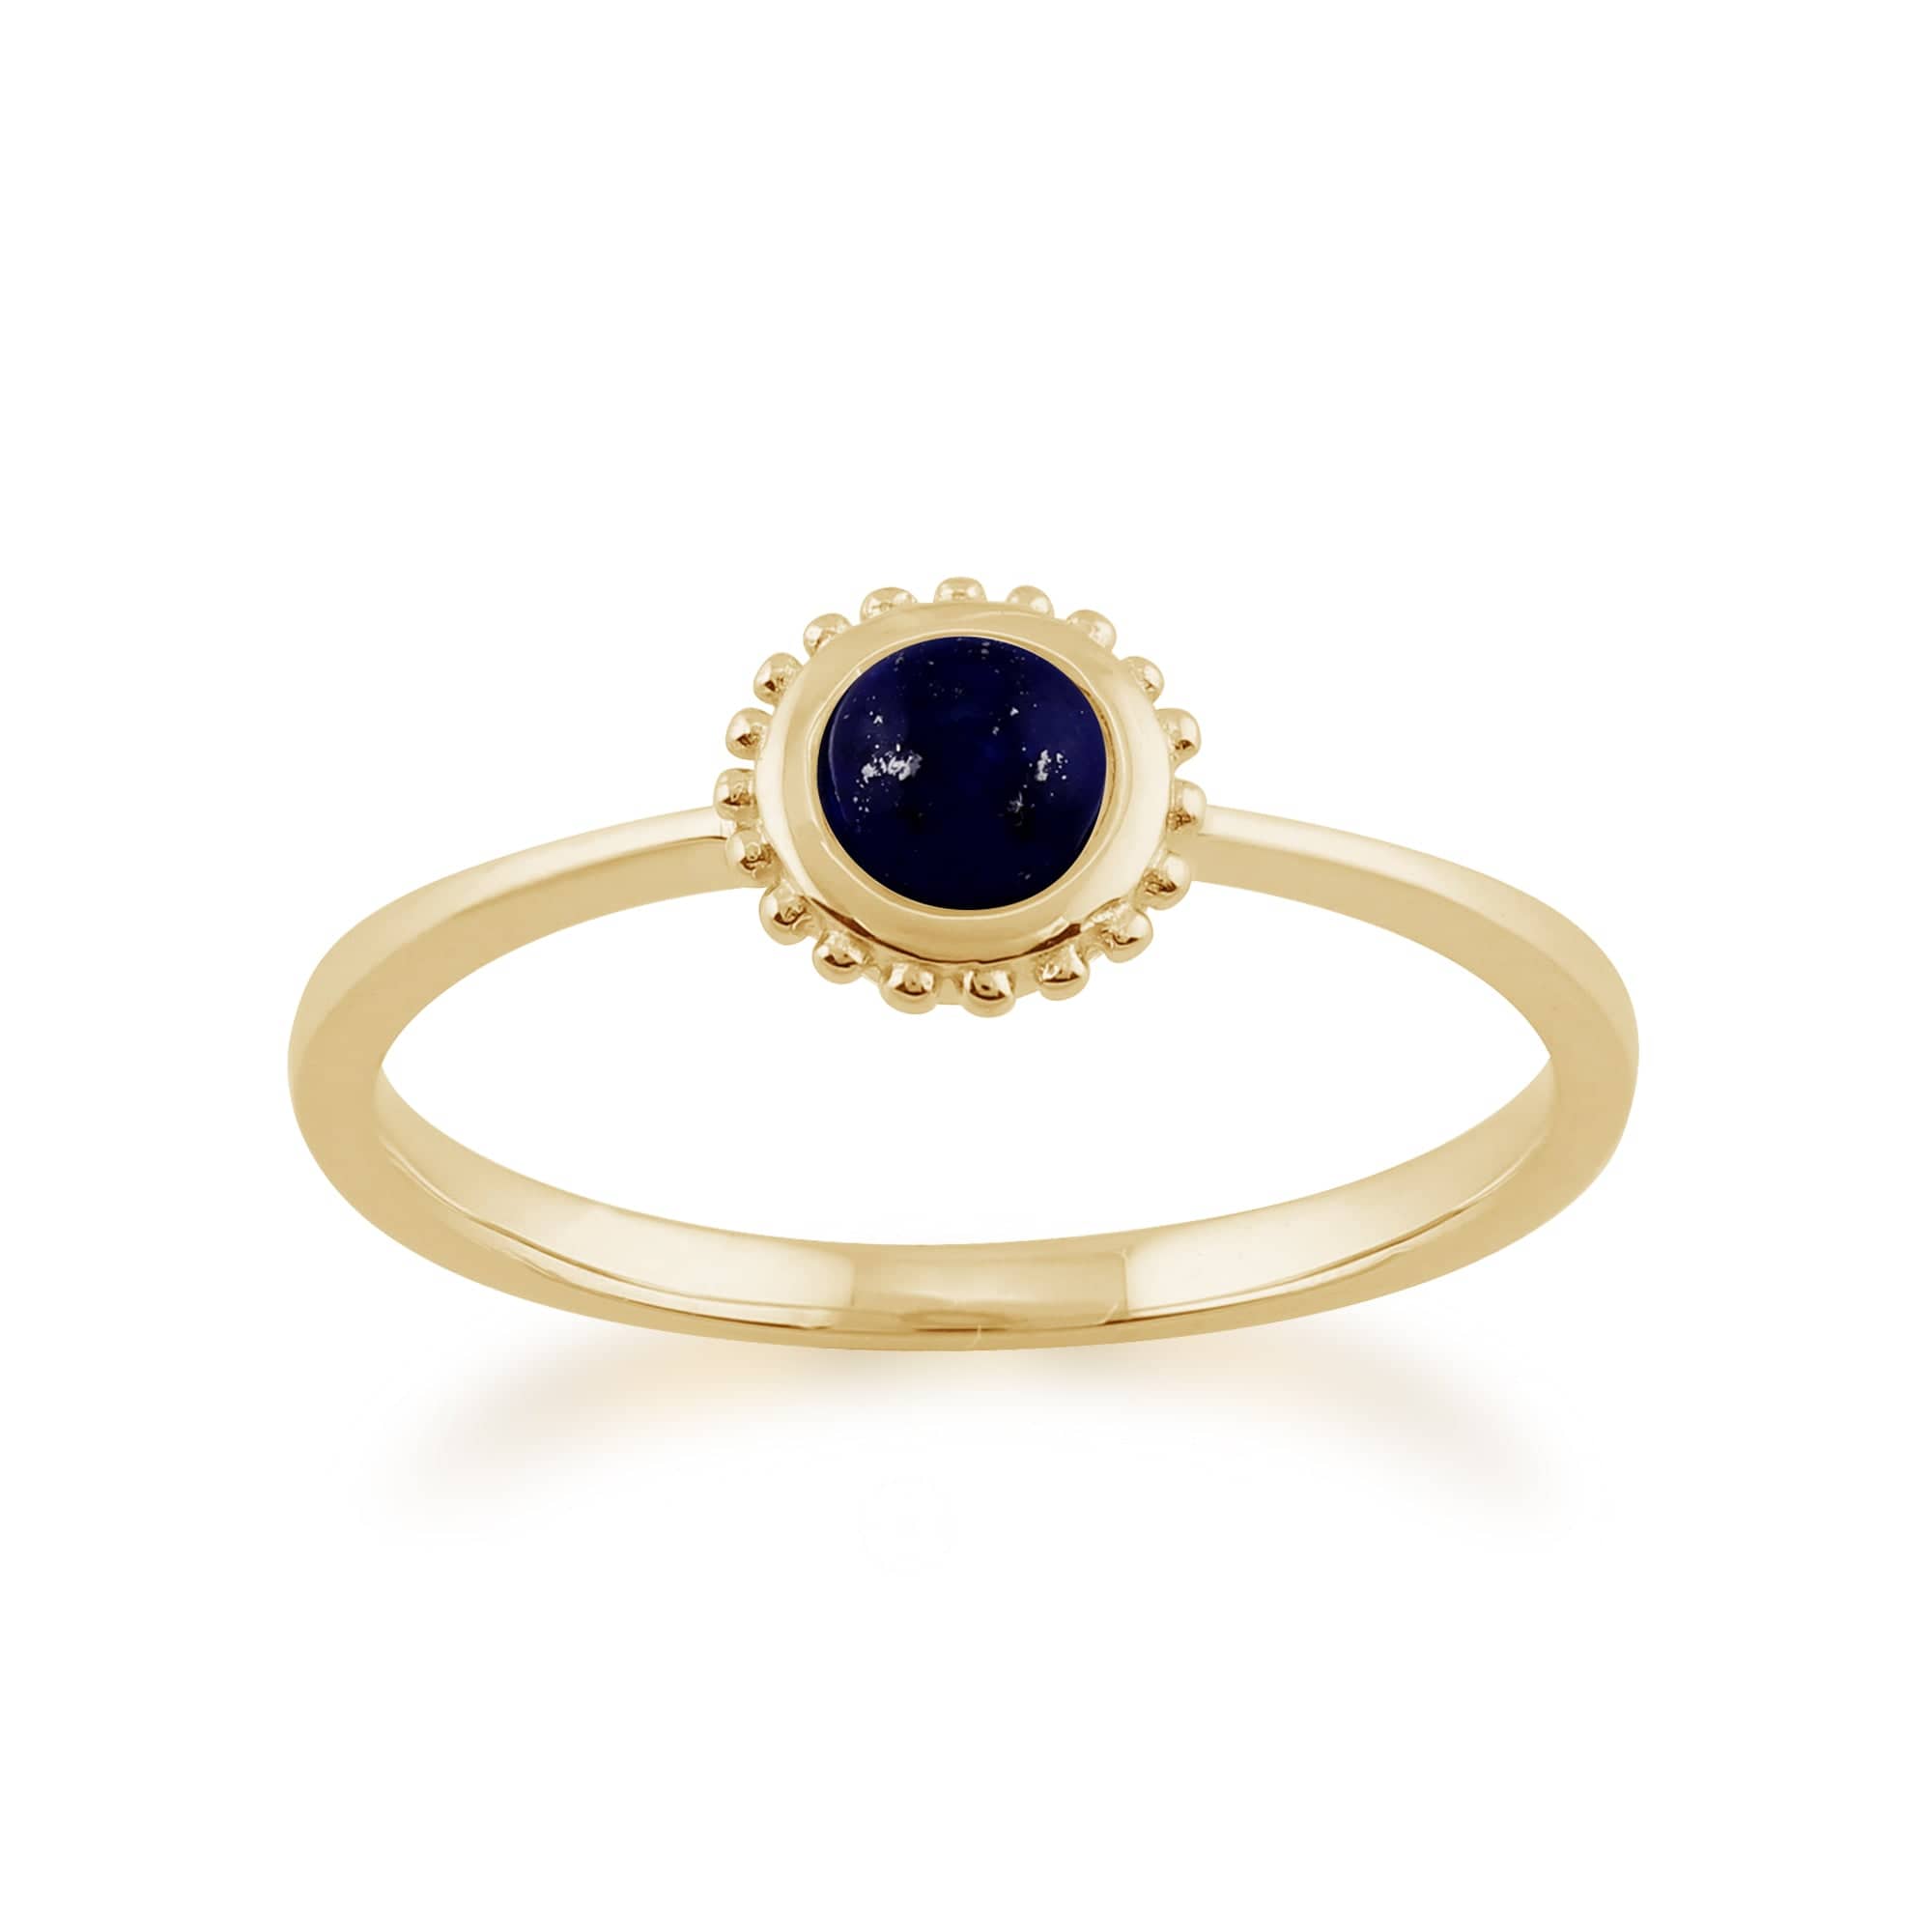 Classic Round Lapis Lazuli Single Stone Pendant & Solitaire Ring Set in 9ct Yellow Gold - Gemondo